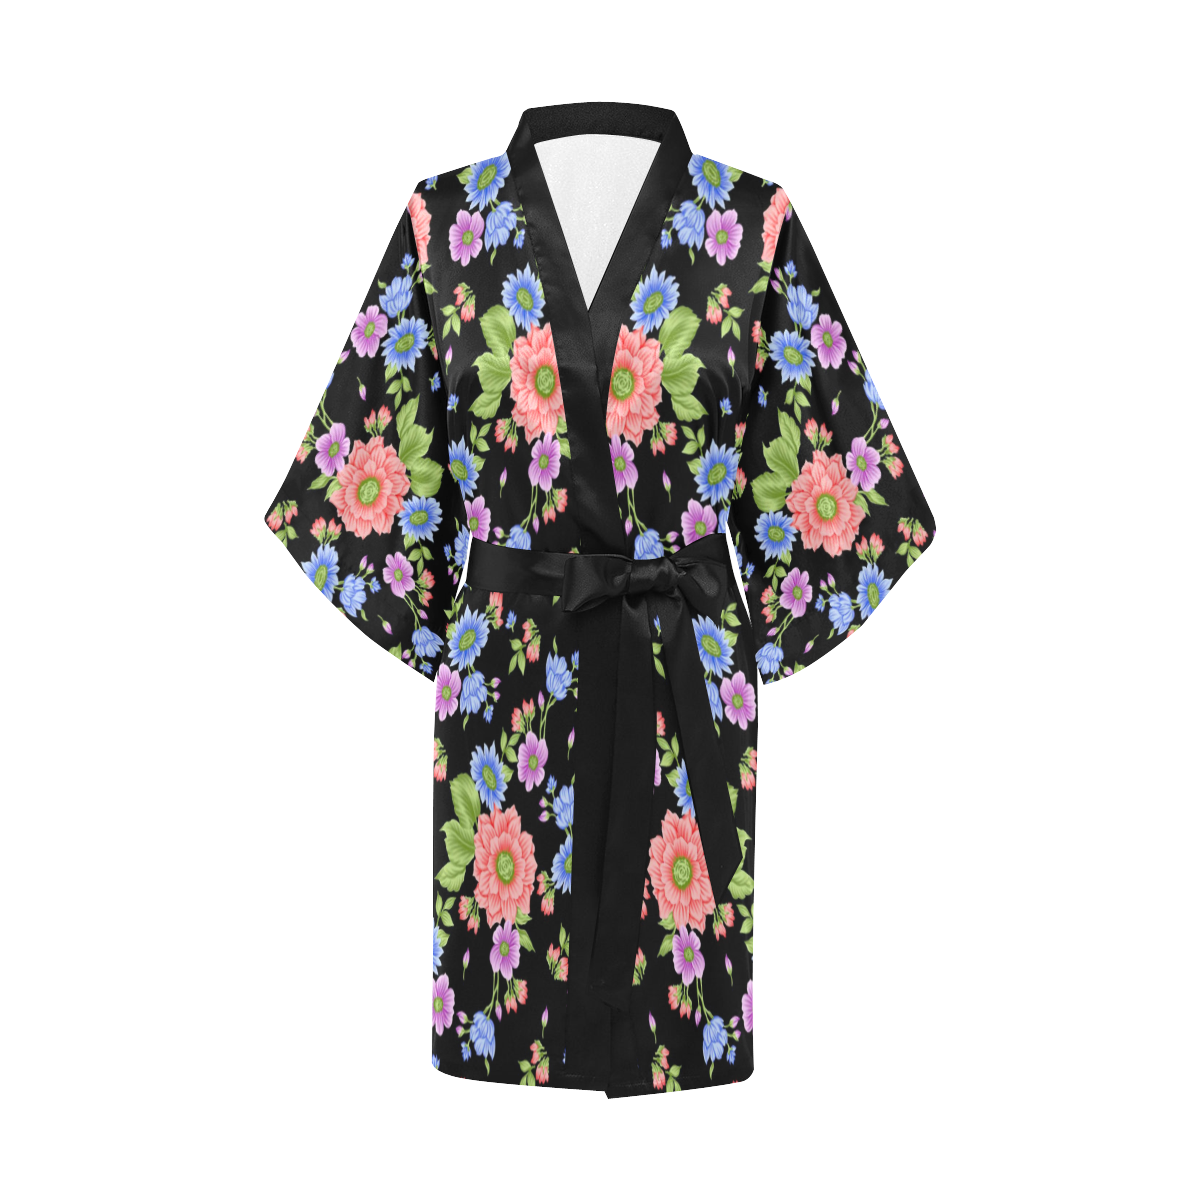 Seasons floral Kimono Robe